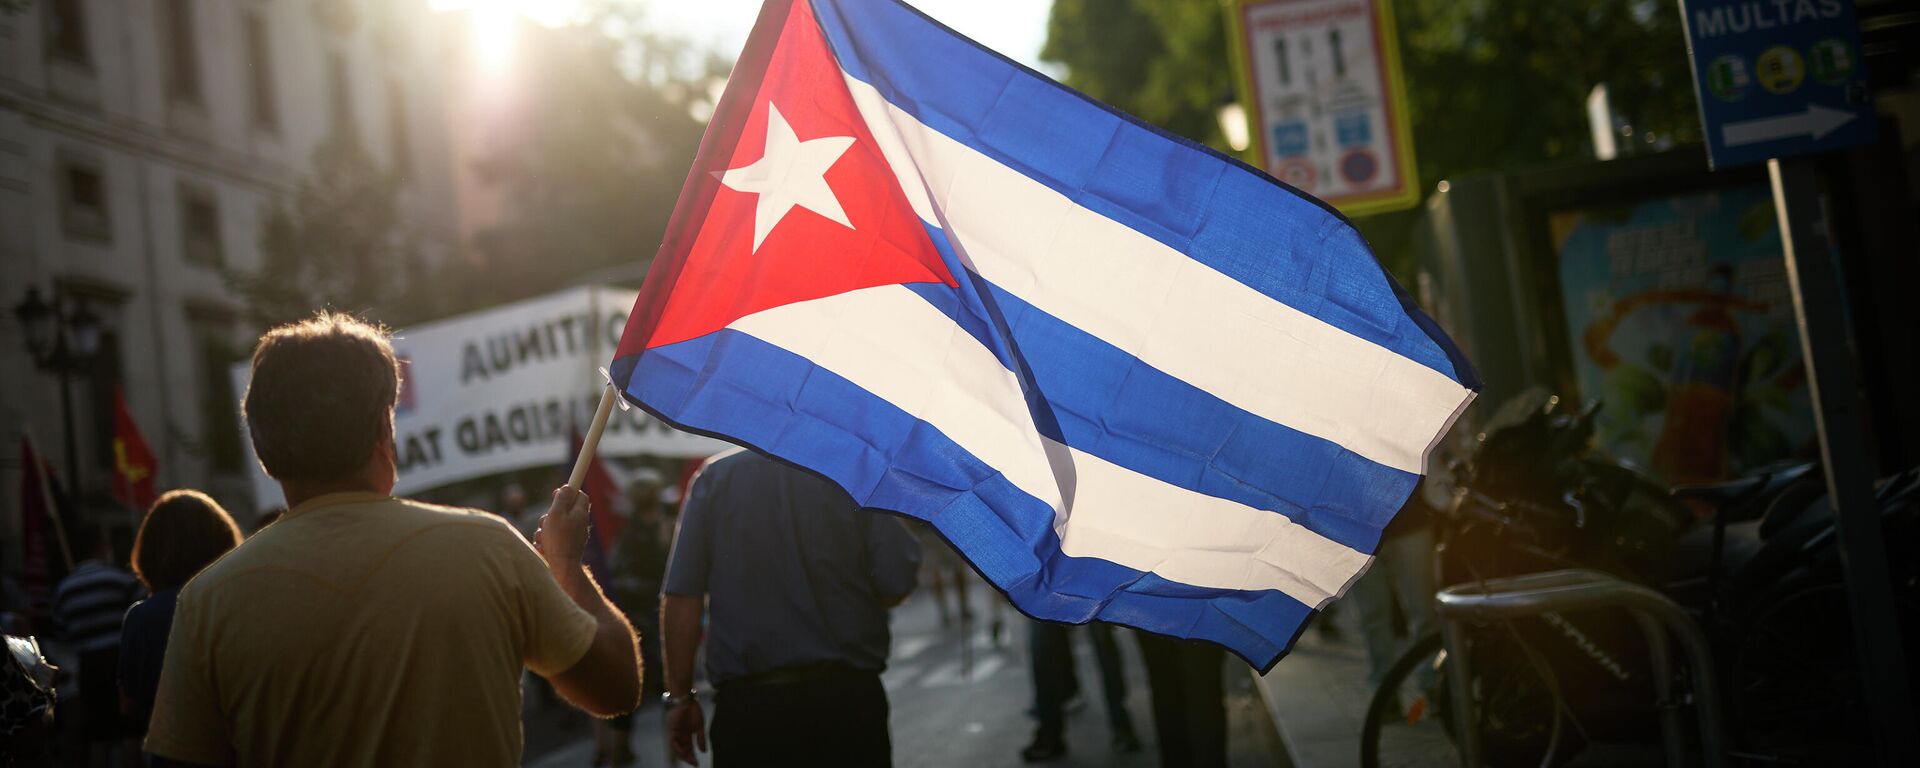 La bandera de Cuba (imagen referencial) - Sputnik Mundo, 1920, 30.12.2021